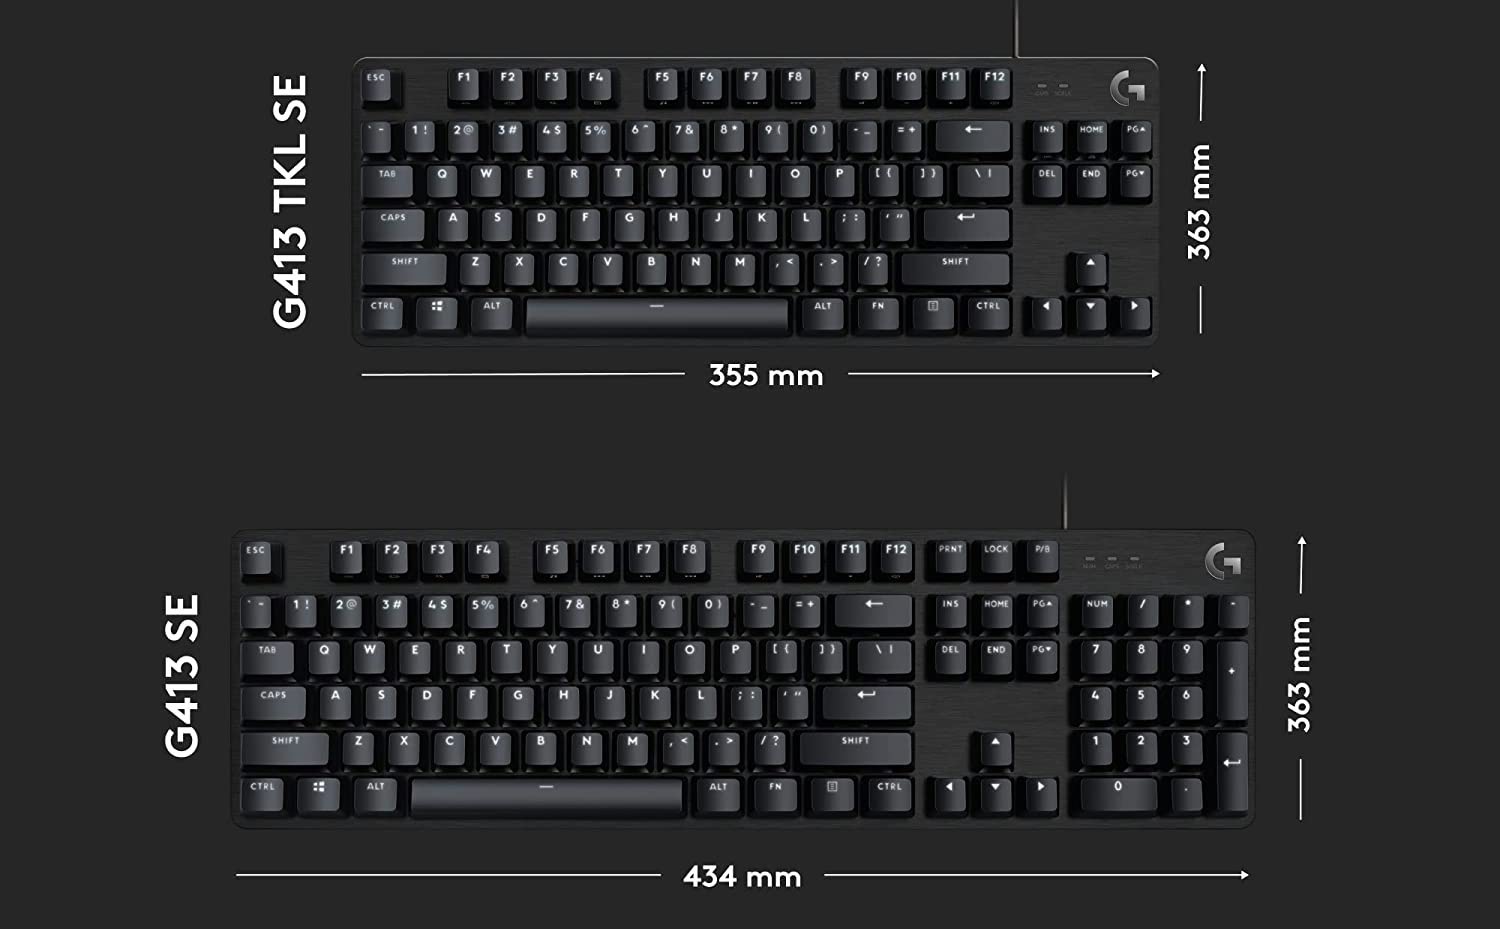 Logitech G413 SE Mechanical Gaming Keyboard - Black, English - US - New!!!